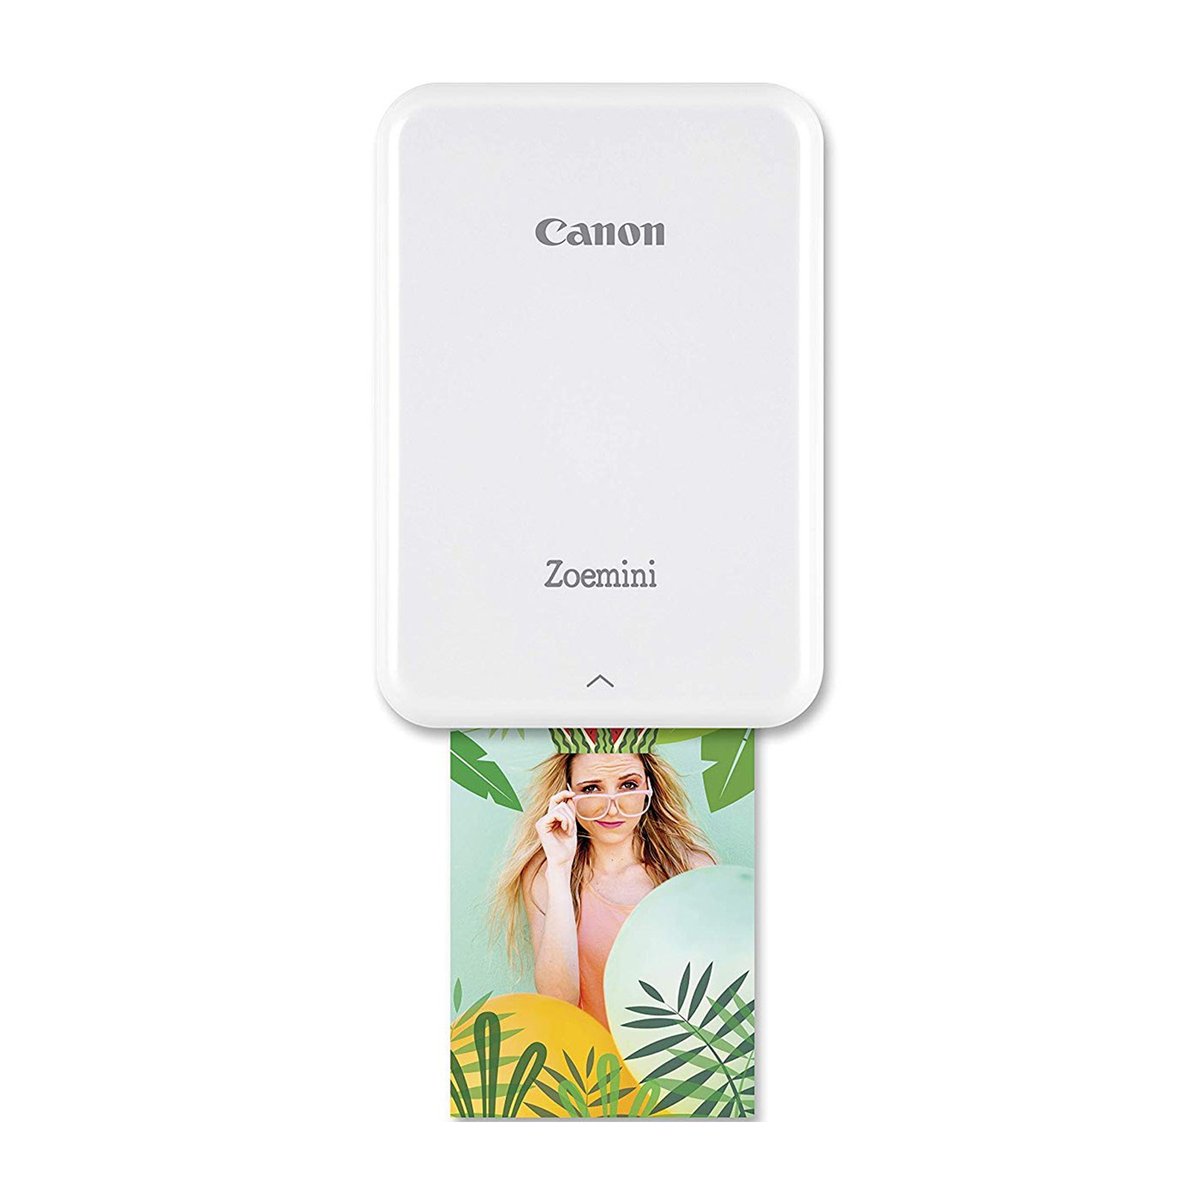 Canon Zoemini Photo Printer PV-123, White